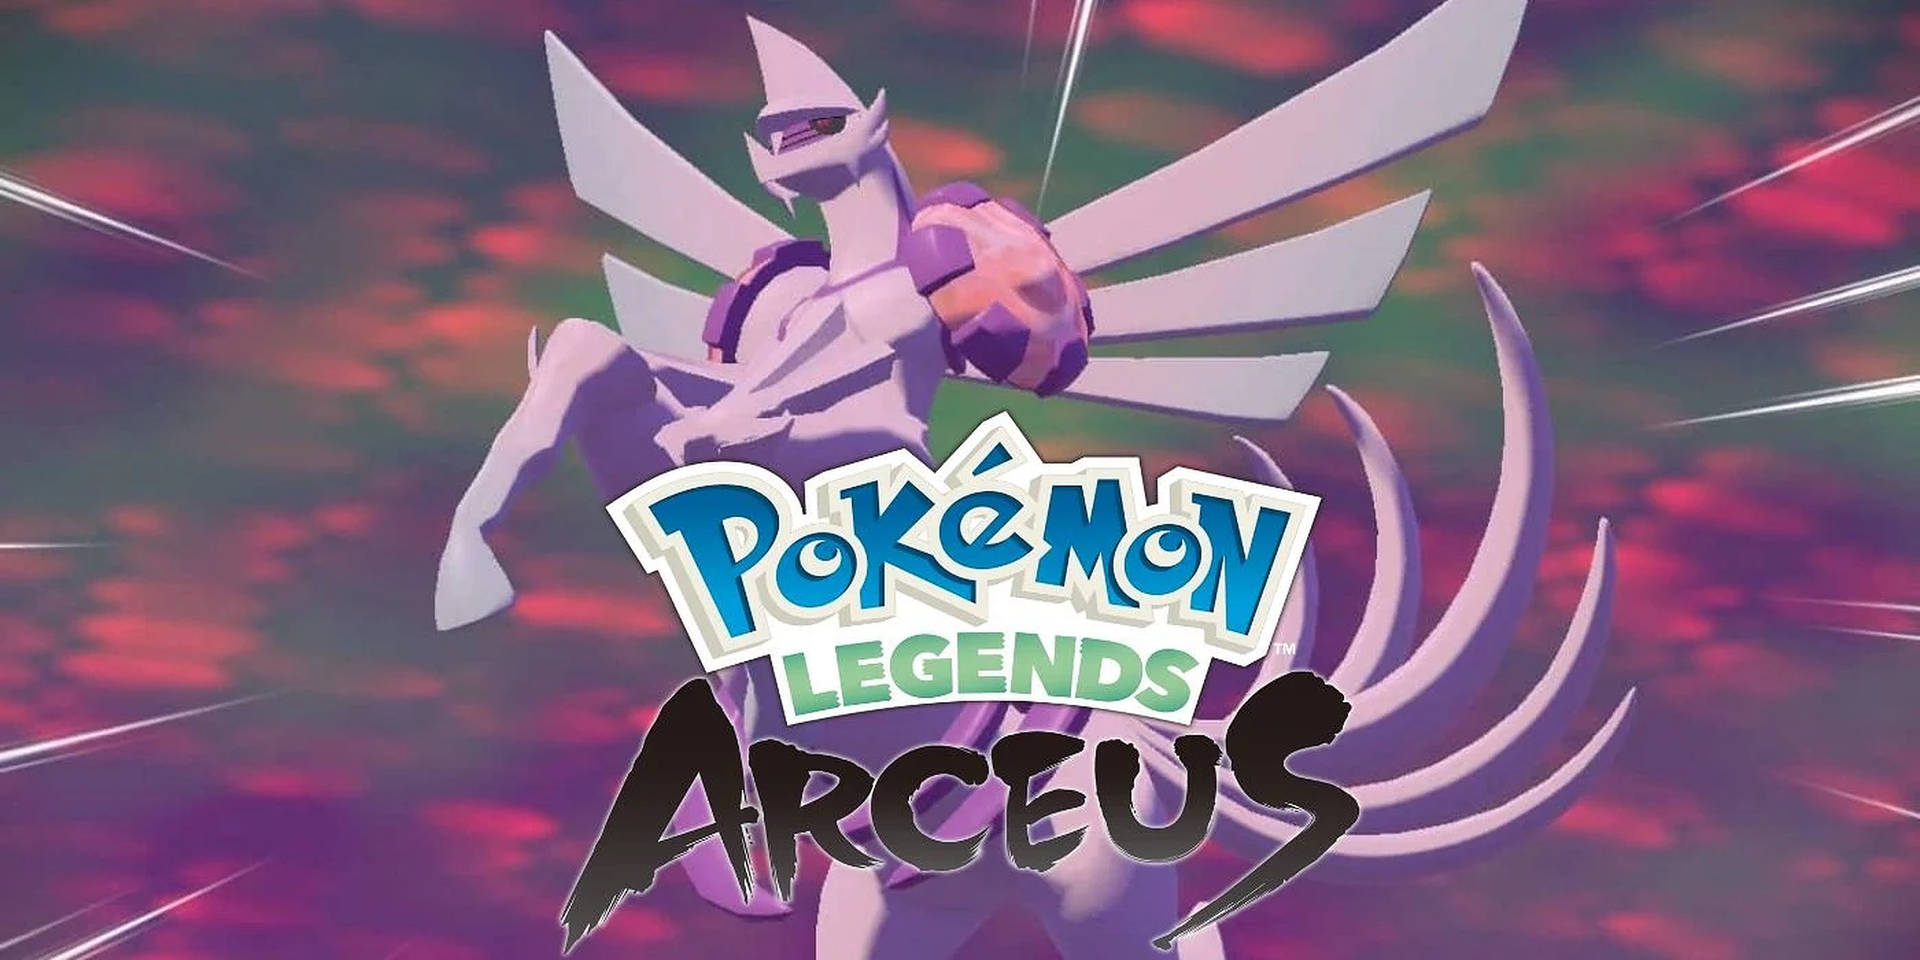 2800X1400 Pokemon Legends Arceus Wallpaper and Background